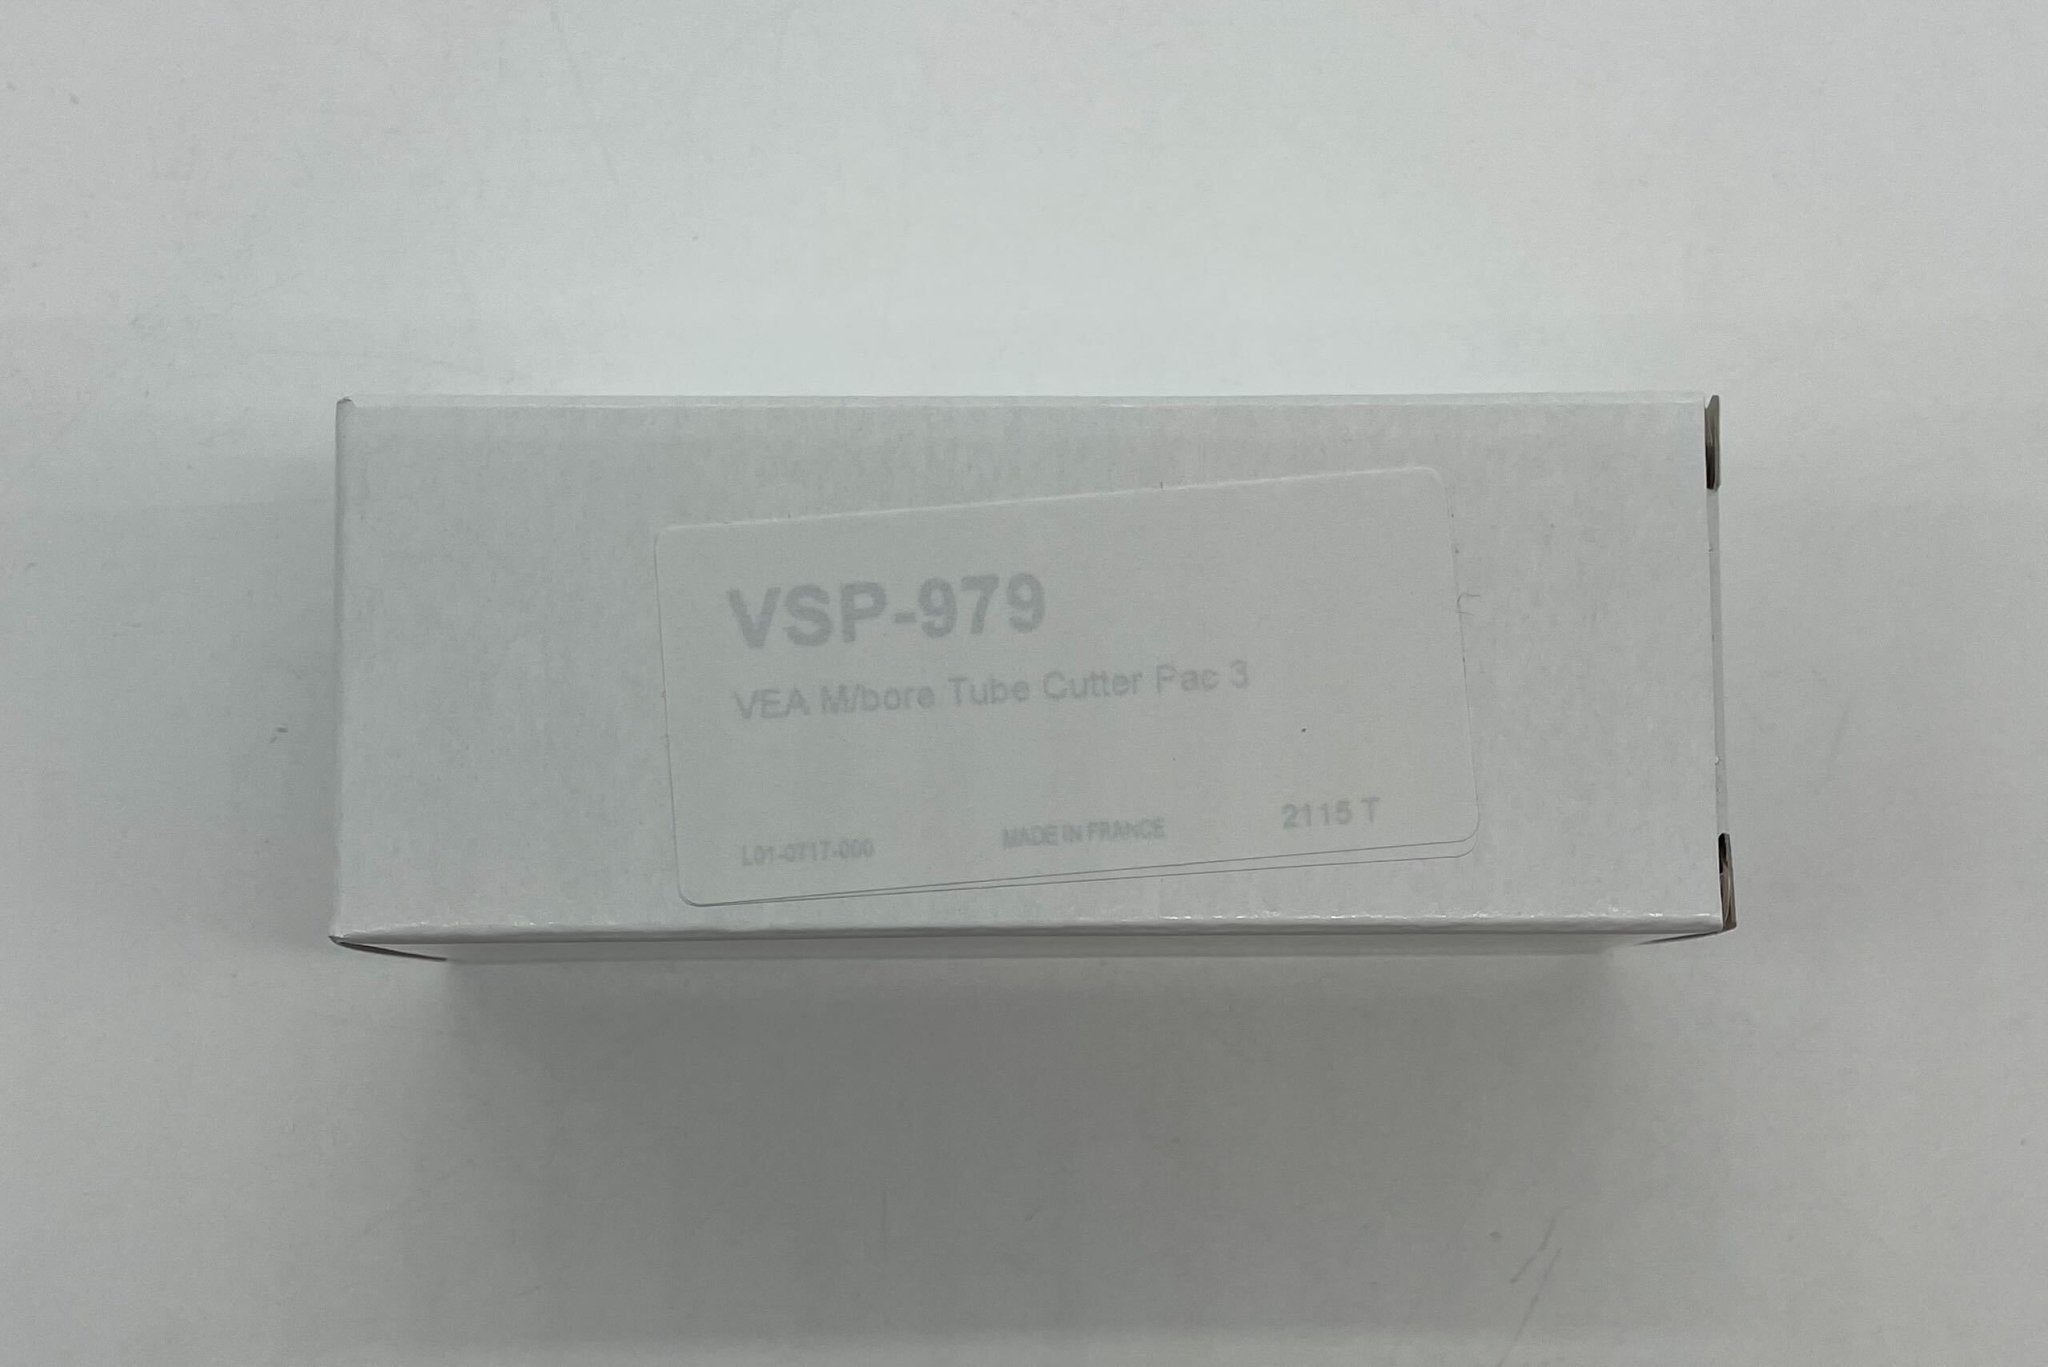 Vesda VSP-979 Tube Cutter (Pack Of 3) - The Fire Alarm Supplier